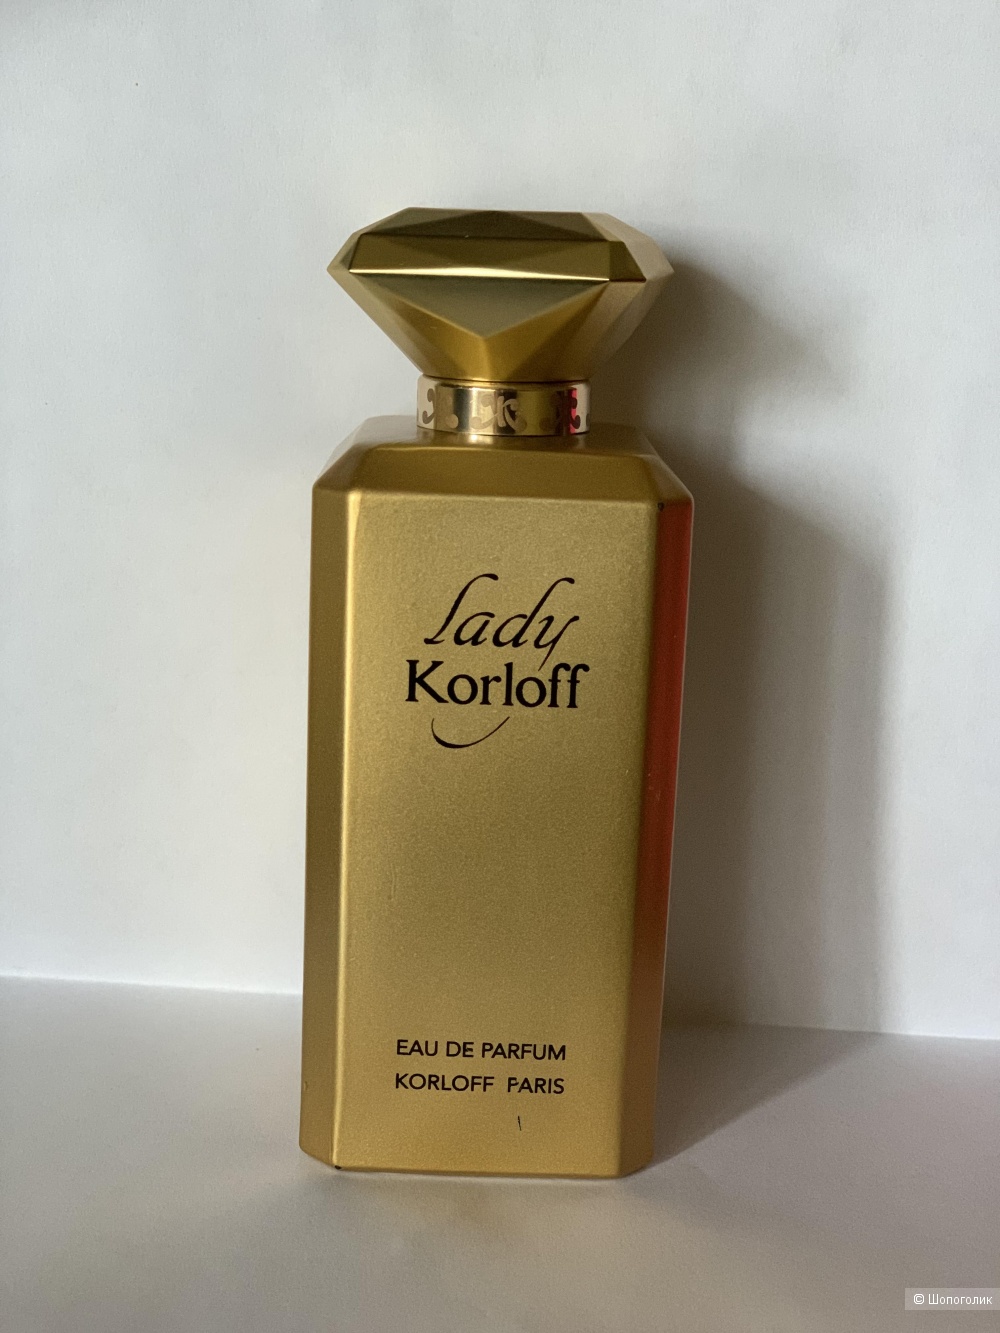 Lady Korloff parfum . 88мл